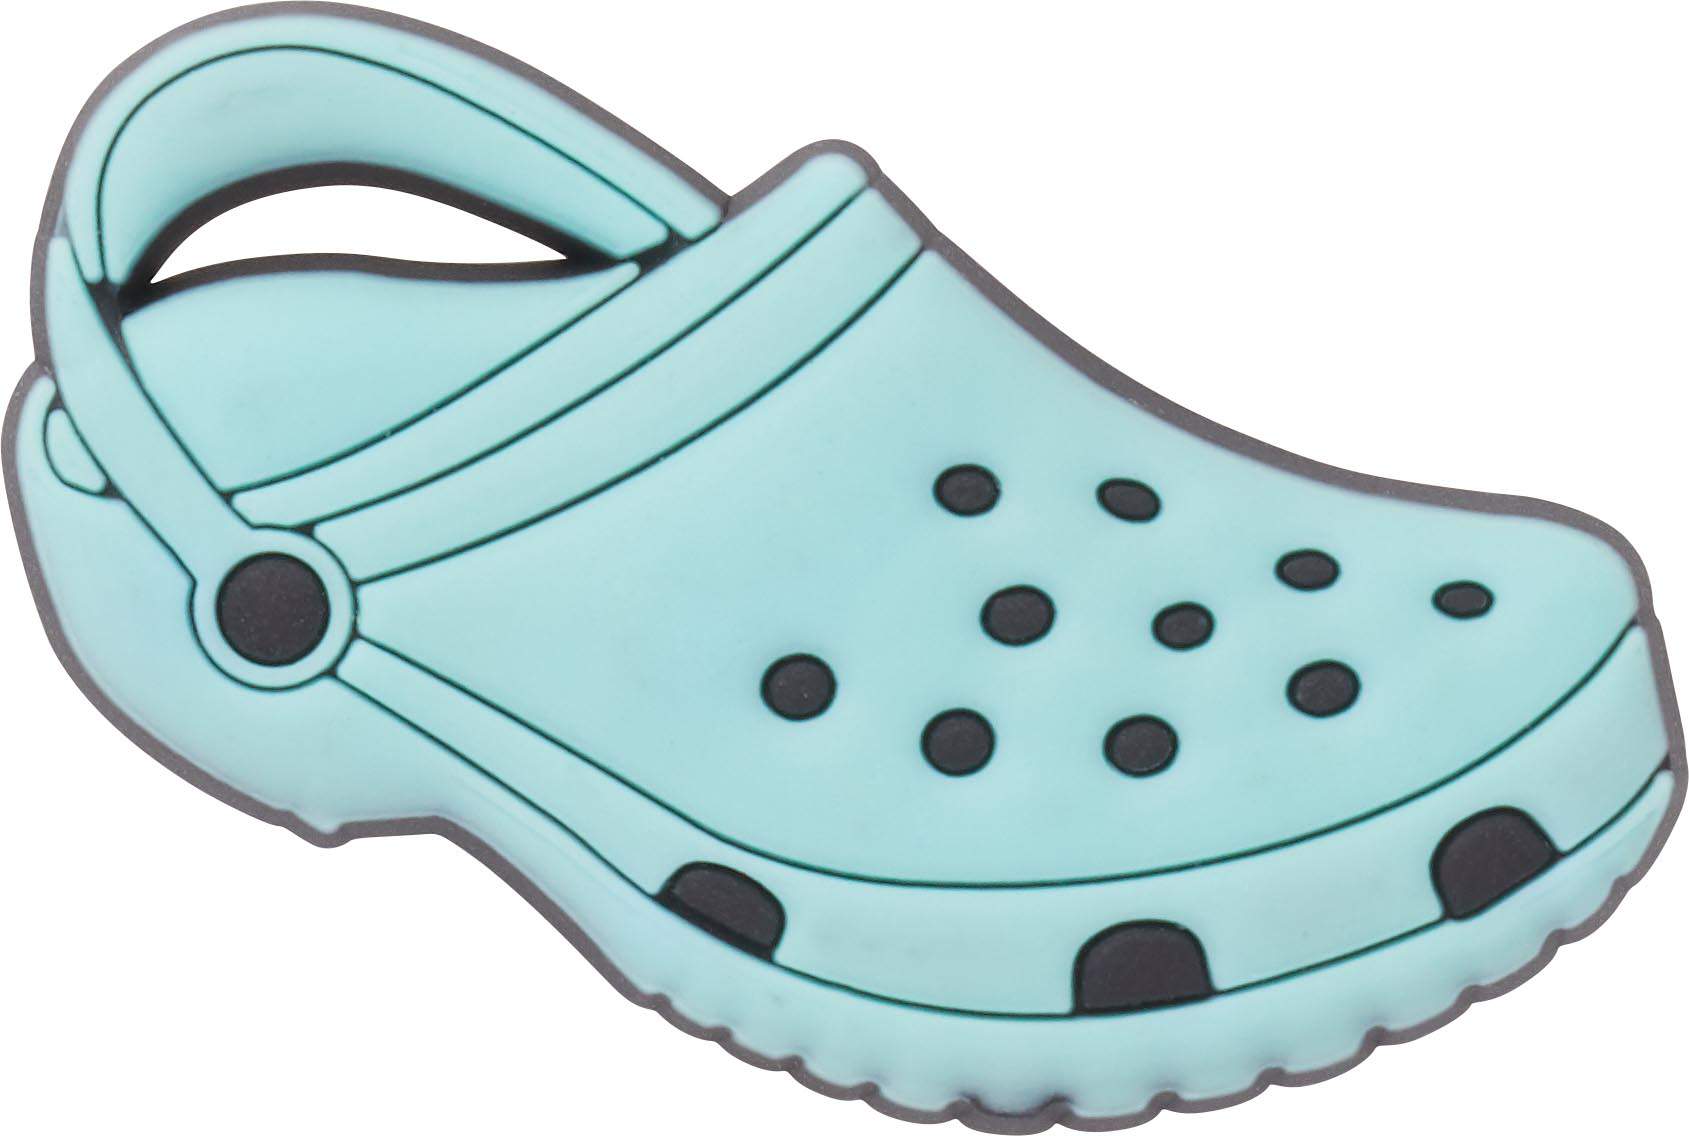 ice blue classic crocs